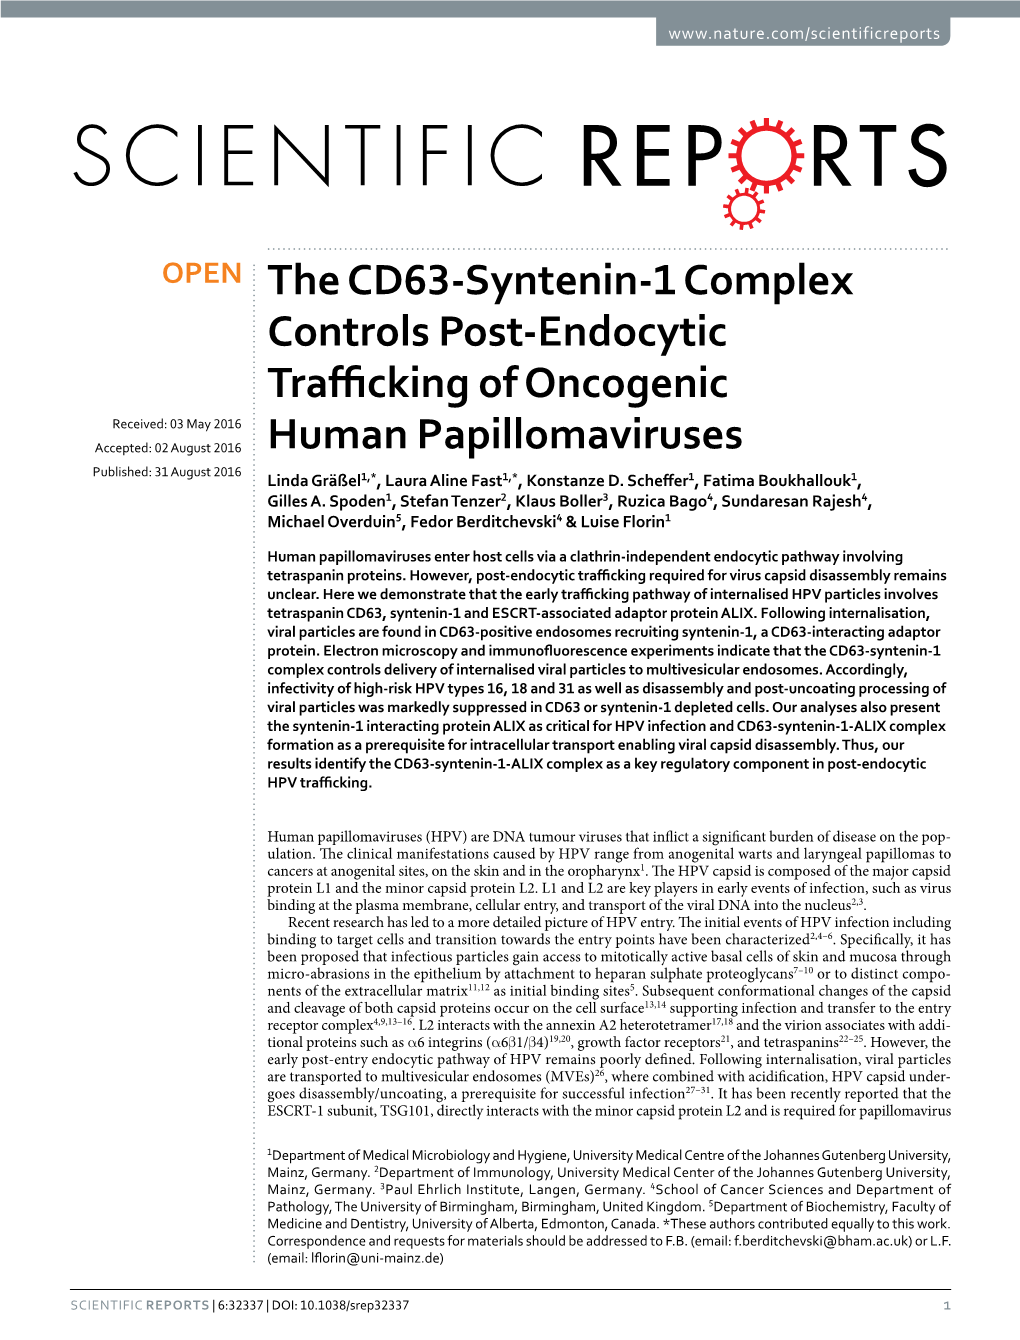 The CD63-Syntenin-1 Complex Controls Post